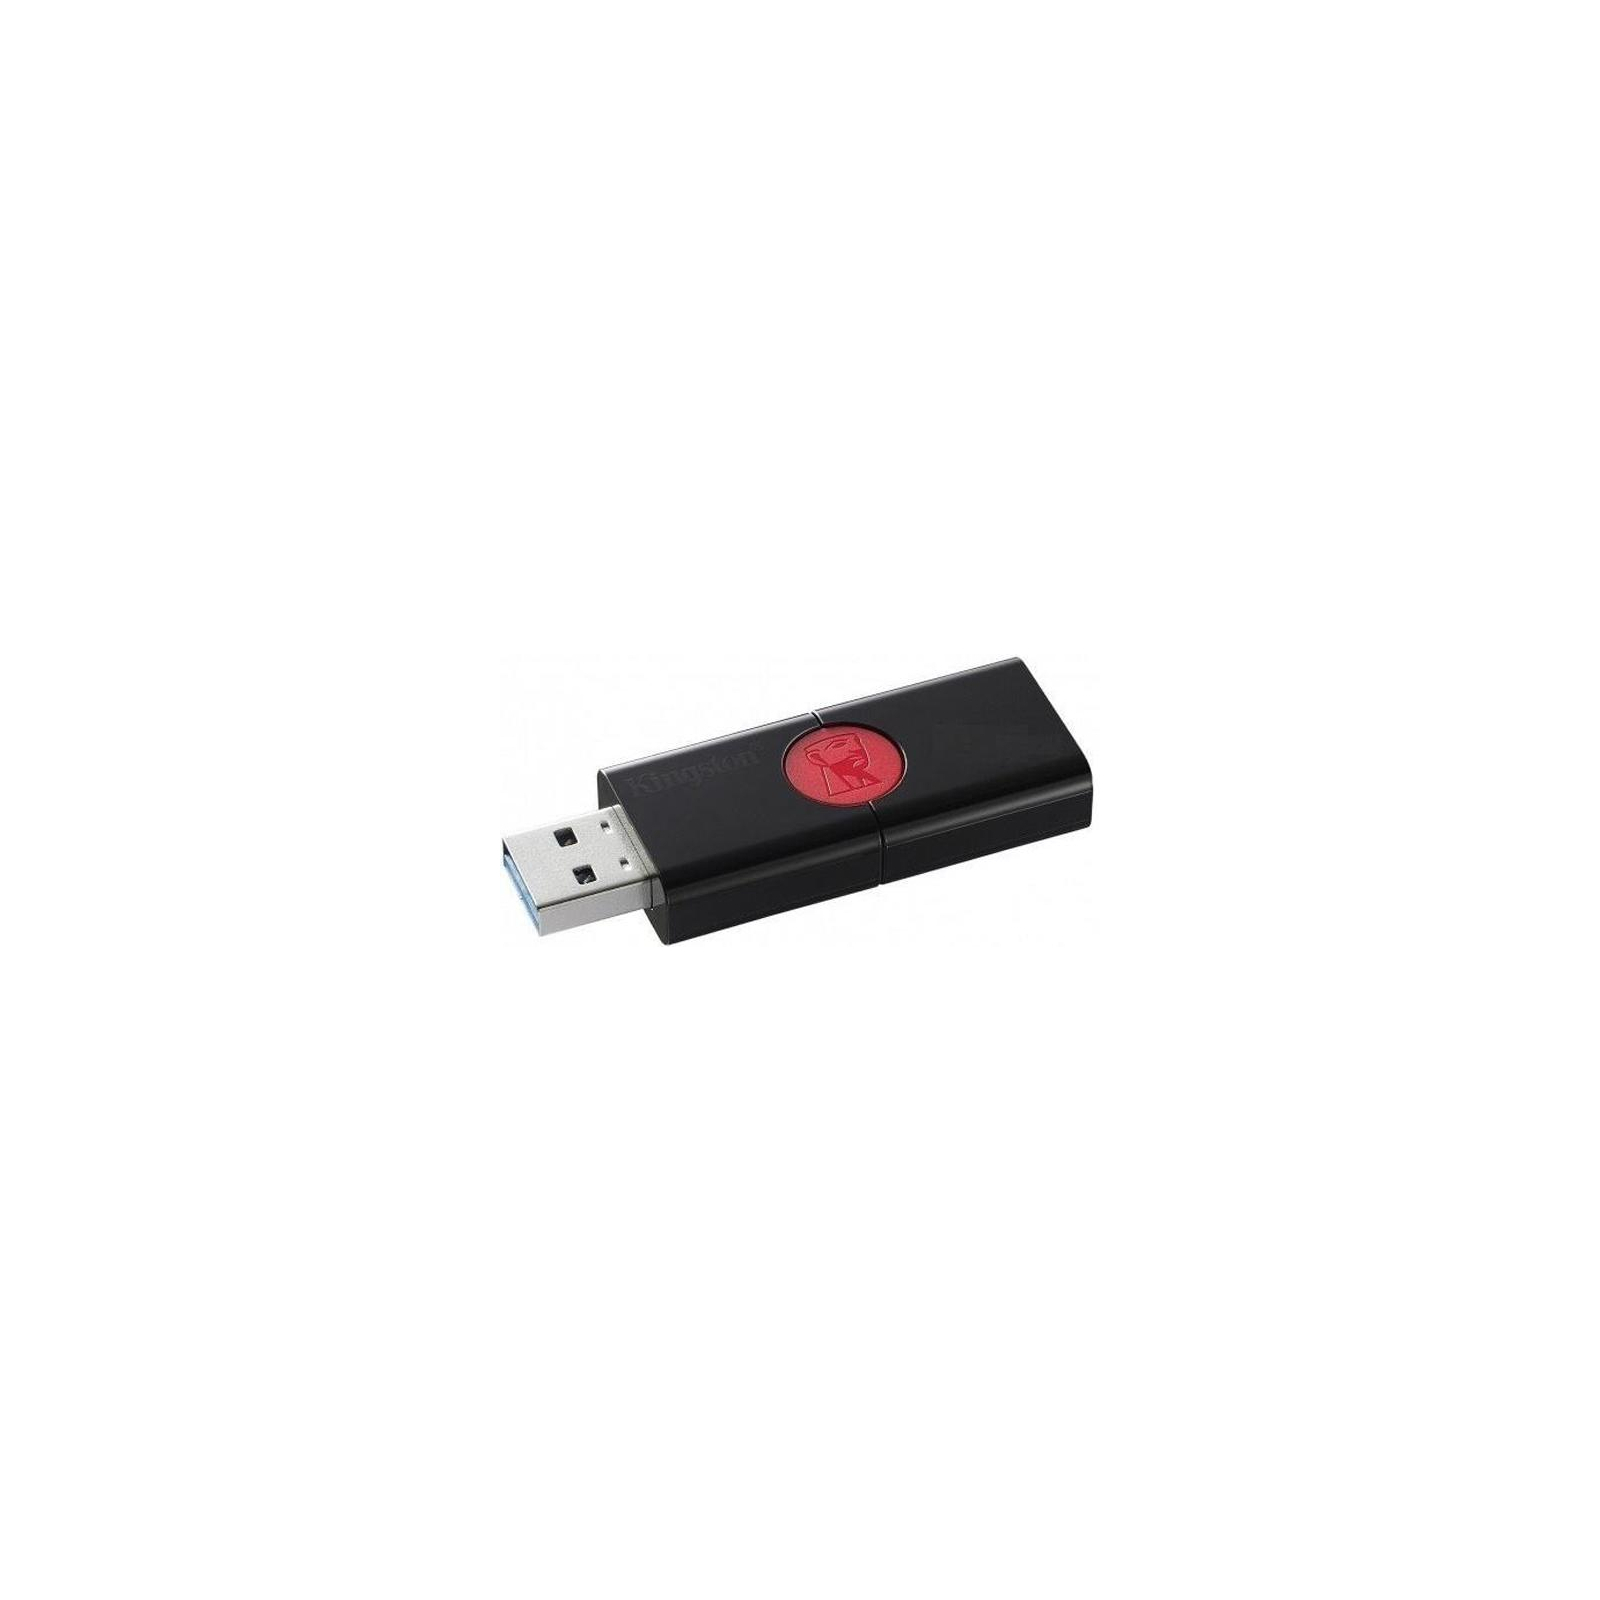 USB флеш накопитель Kingston 32GB DT106 USB 3.0 (DT106/32GB) изображение 4